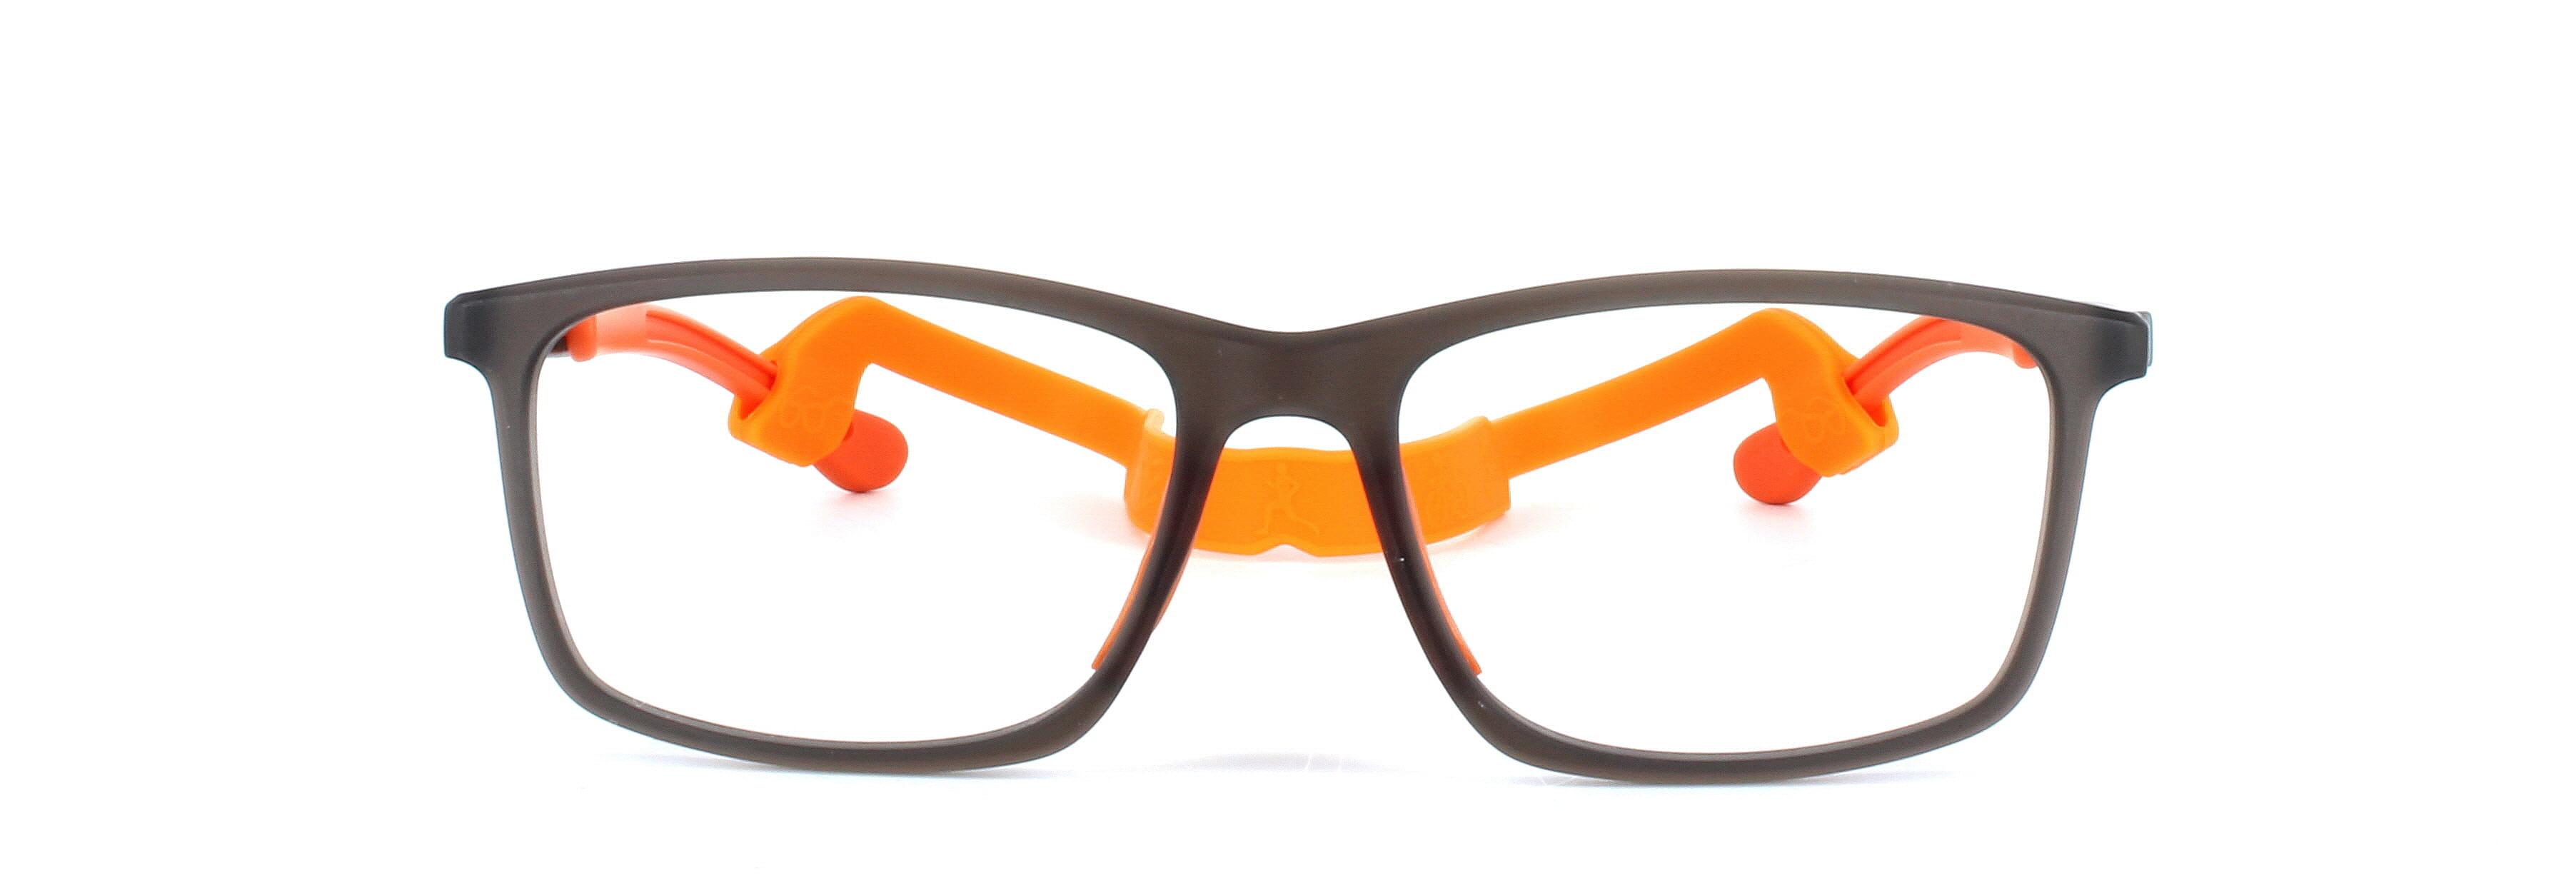 Player - Gents prescription sports glasses - grey and orange - image 5